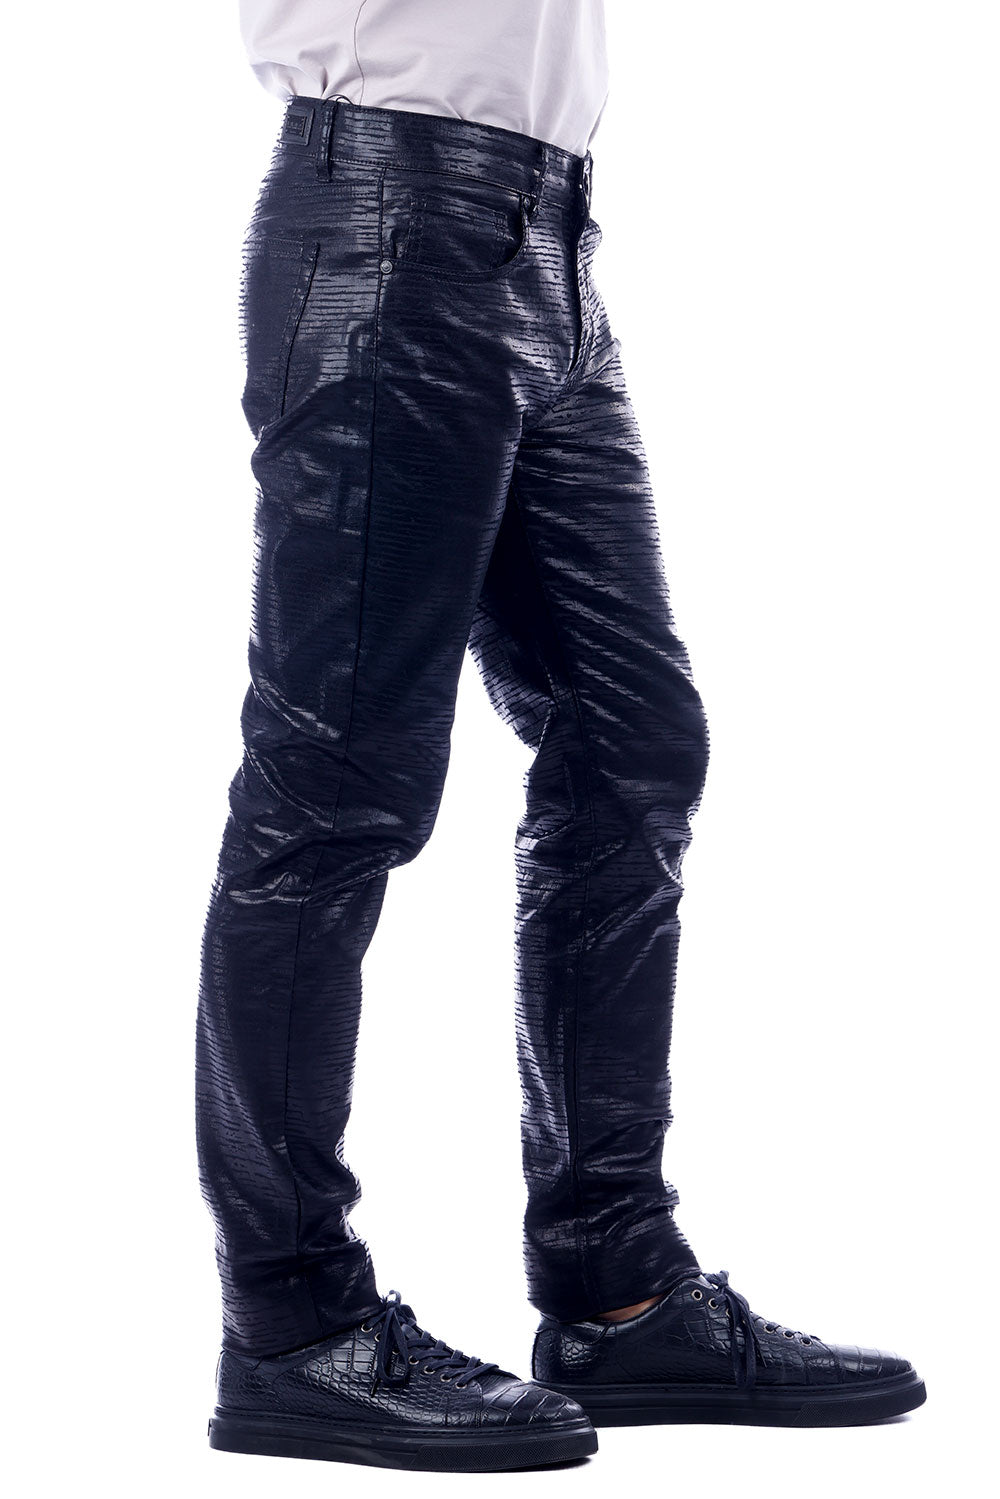 Barabas Men's Shiny Textured Premium Stretch Pants 4CP20 Black